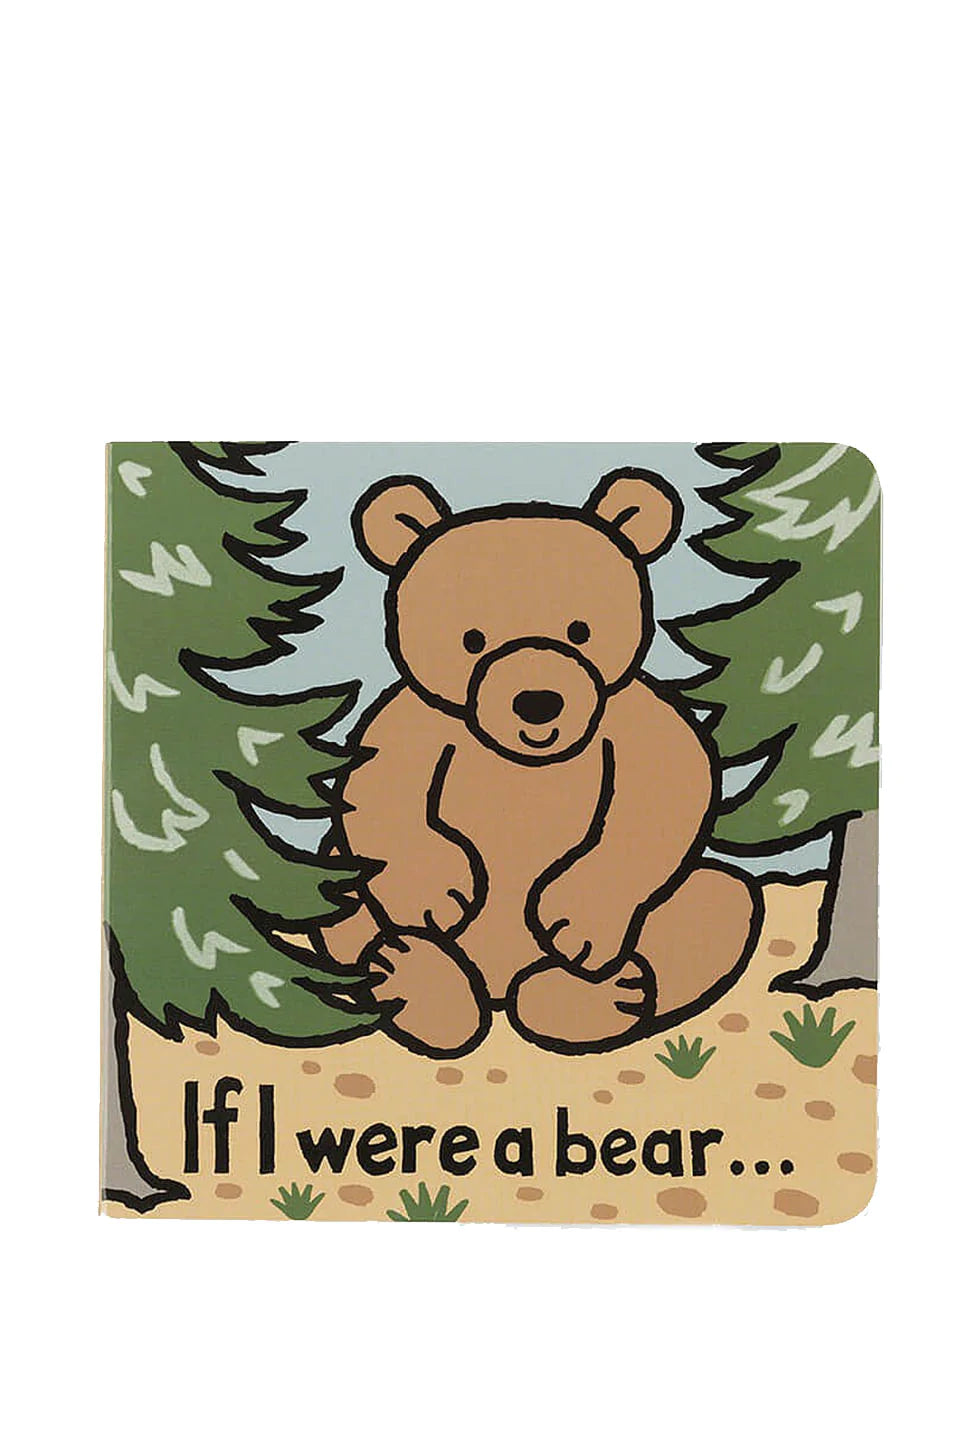 If I were a bear